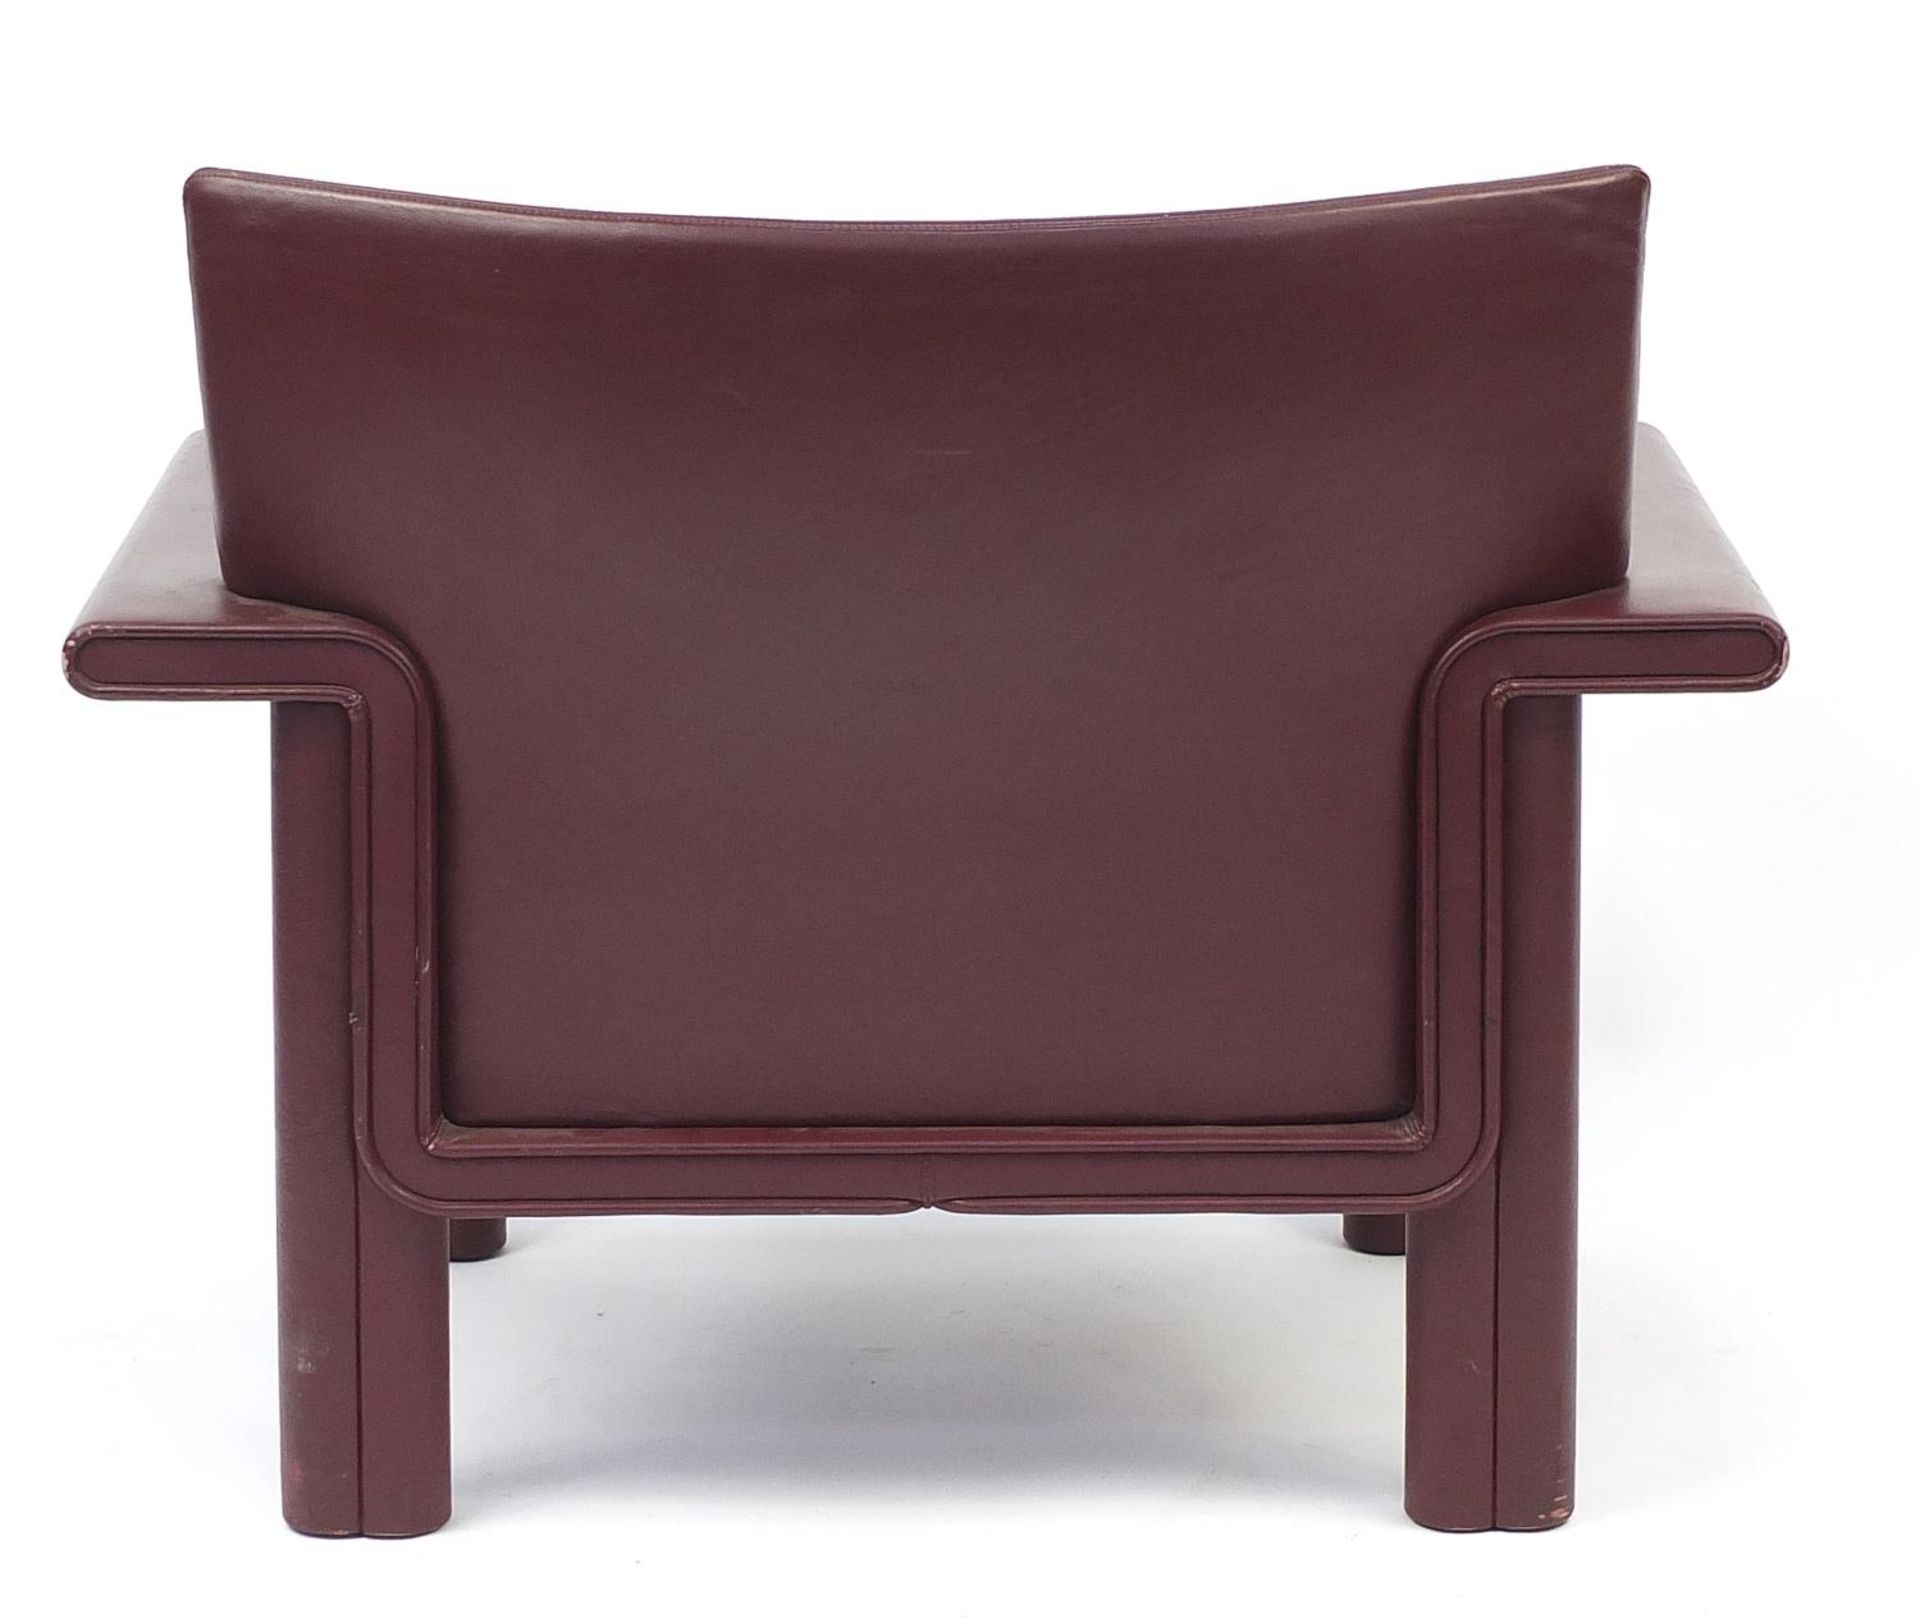 Afra and Tobia Scarpa for Meritalia, Italian burgundy leather Cornelia armchair, 77cm H x 95cm W x - Image 4 of 4